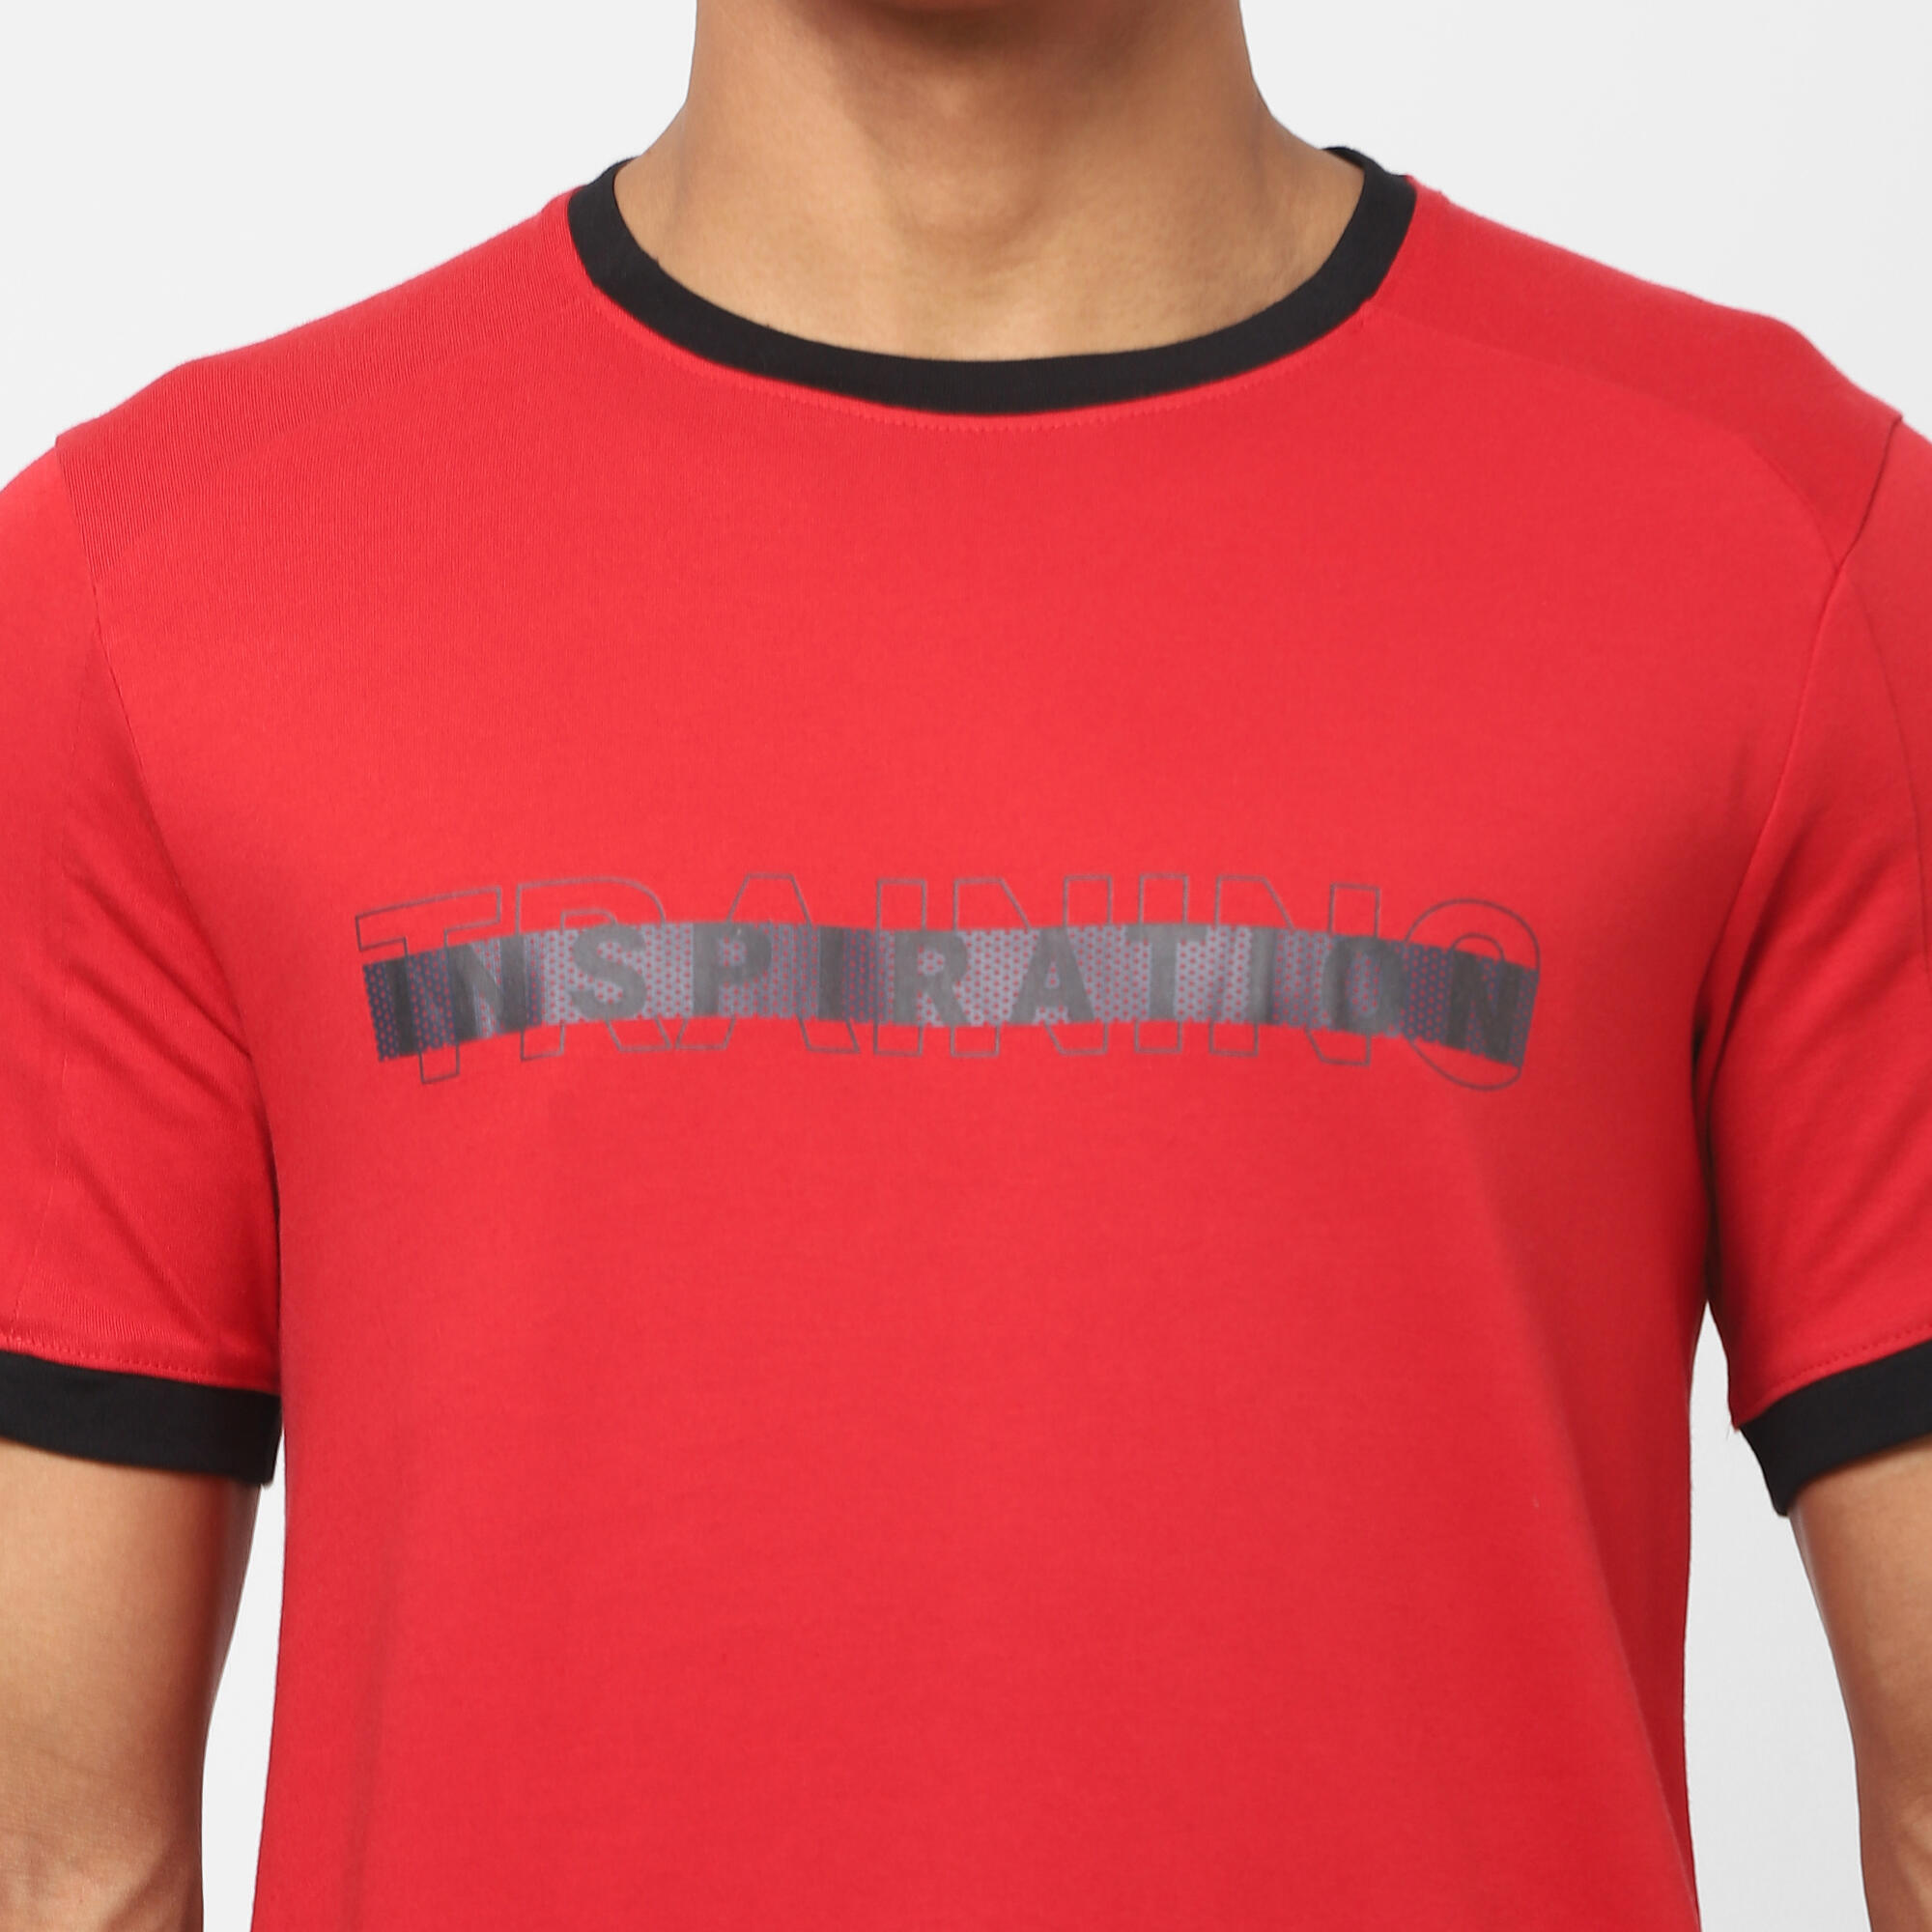 Men's Short-Sleeved Fitted-Cut Crew Neck Cotton Fitness T-Shirt 520 - Garnet Red 2/7